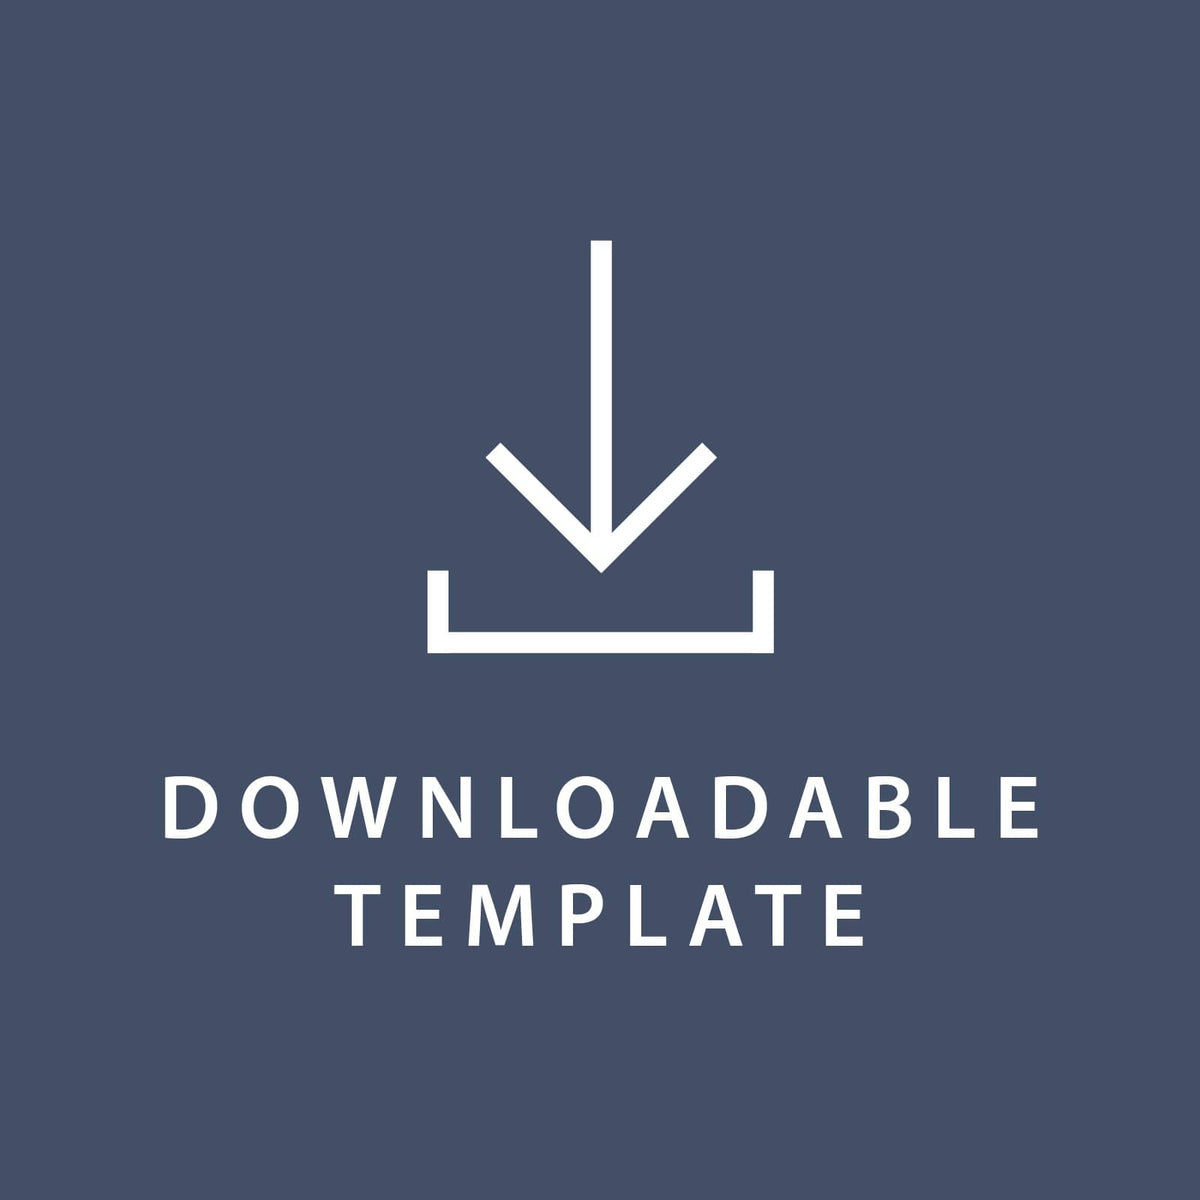 Template for 8.5 x 5.5 All Purpose Cards Gartner Studios Template tmplt0821